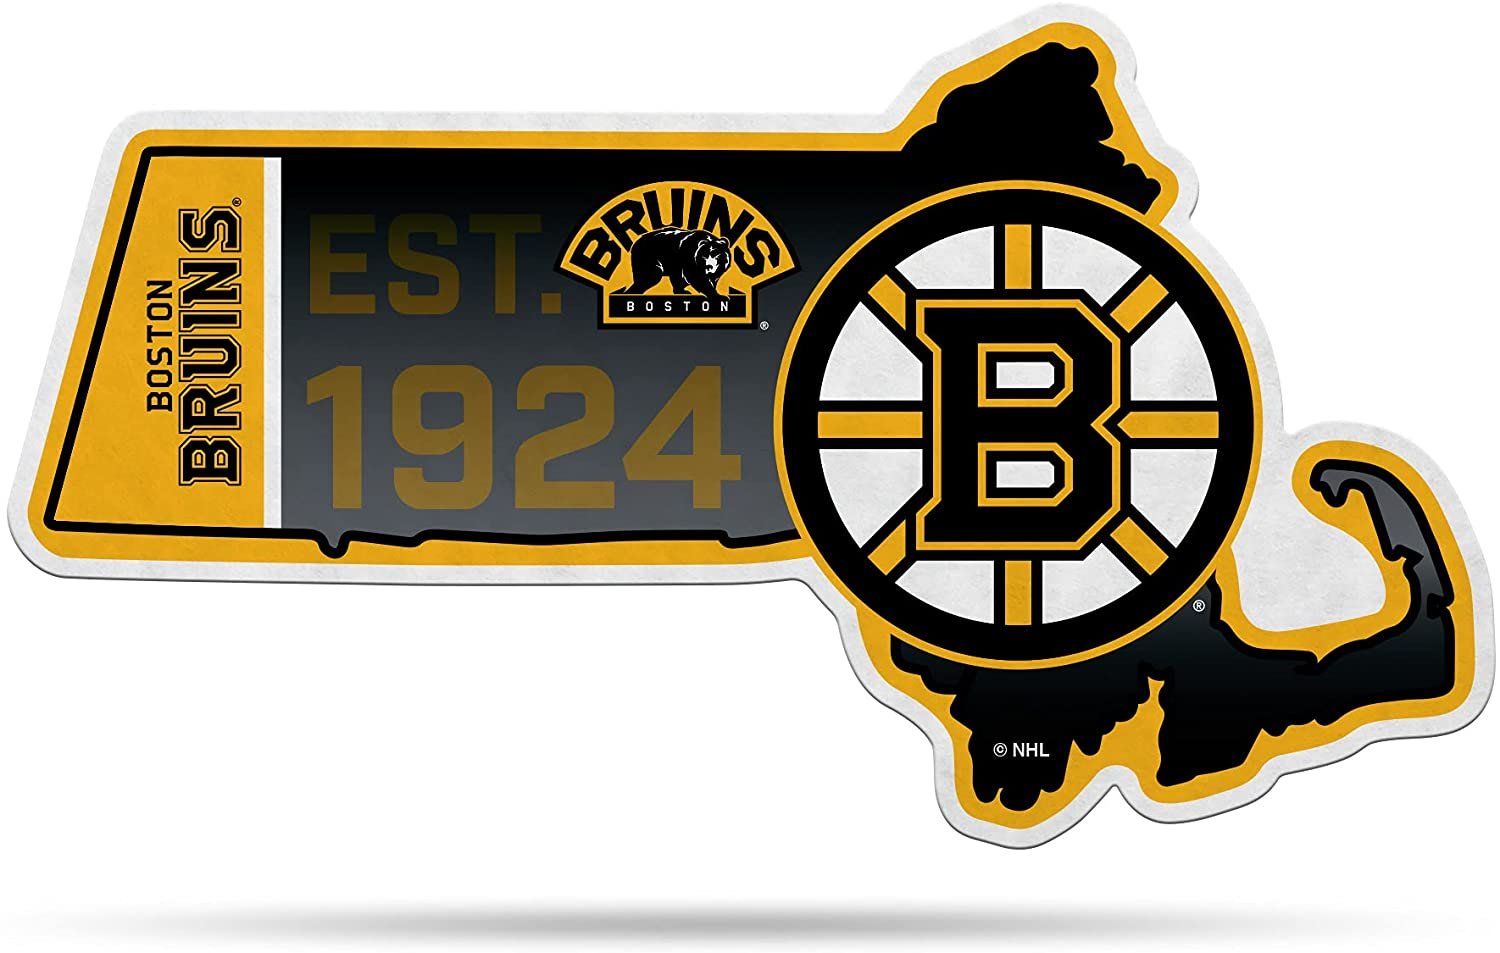 Boston Bruins 18" State Shape Pennant Soft Felt